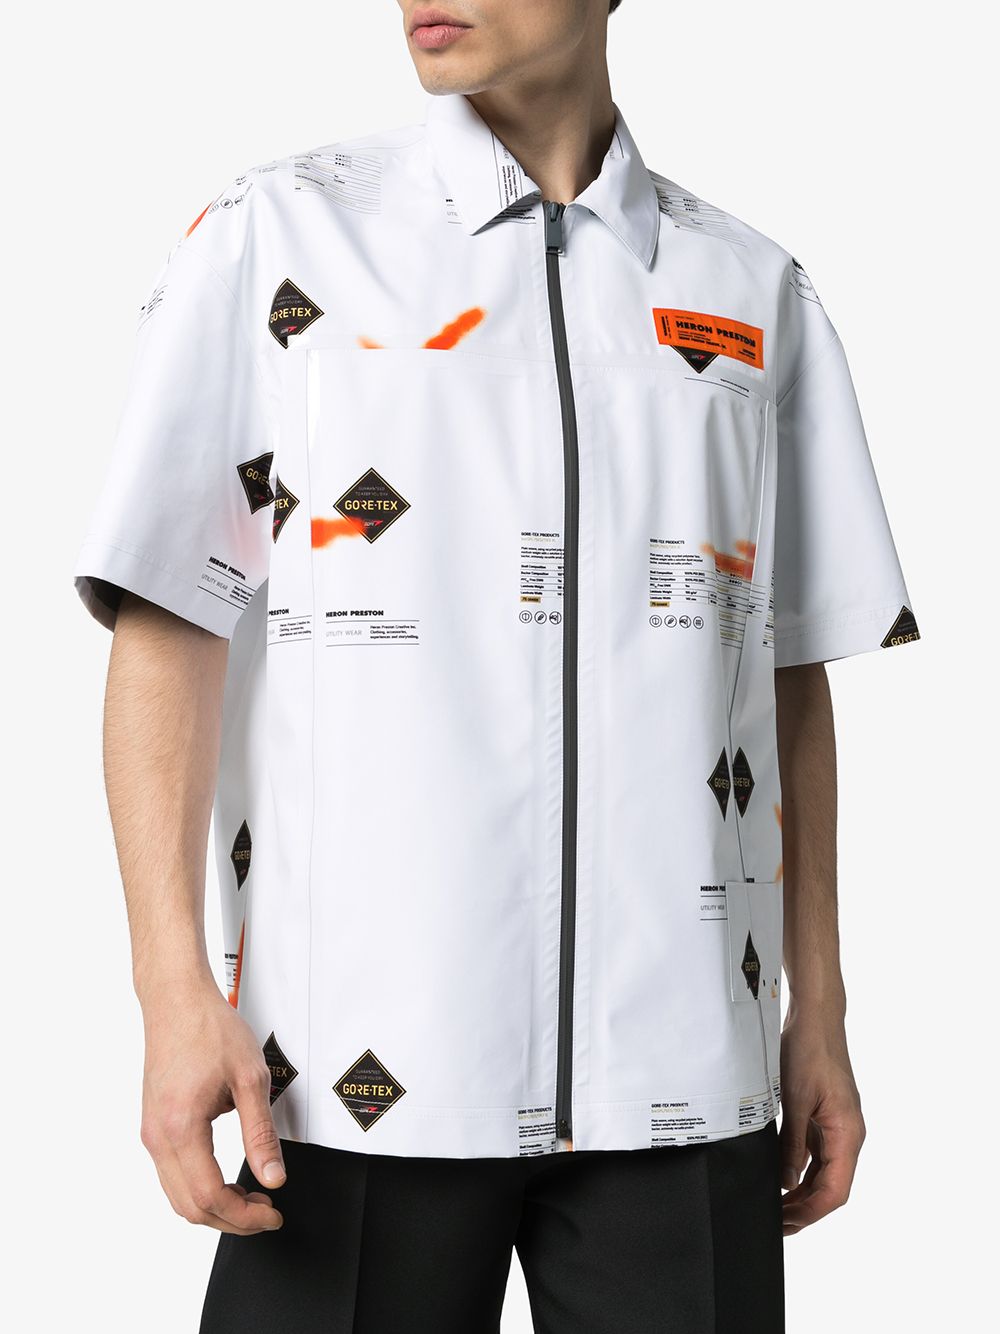 Heron Preston 半袖ジップシャツ Gore-tex Sサイズ 新品-